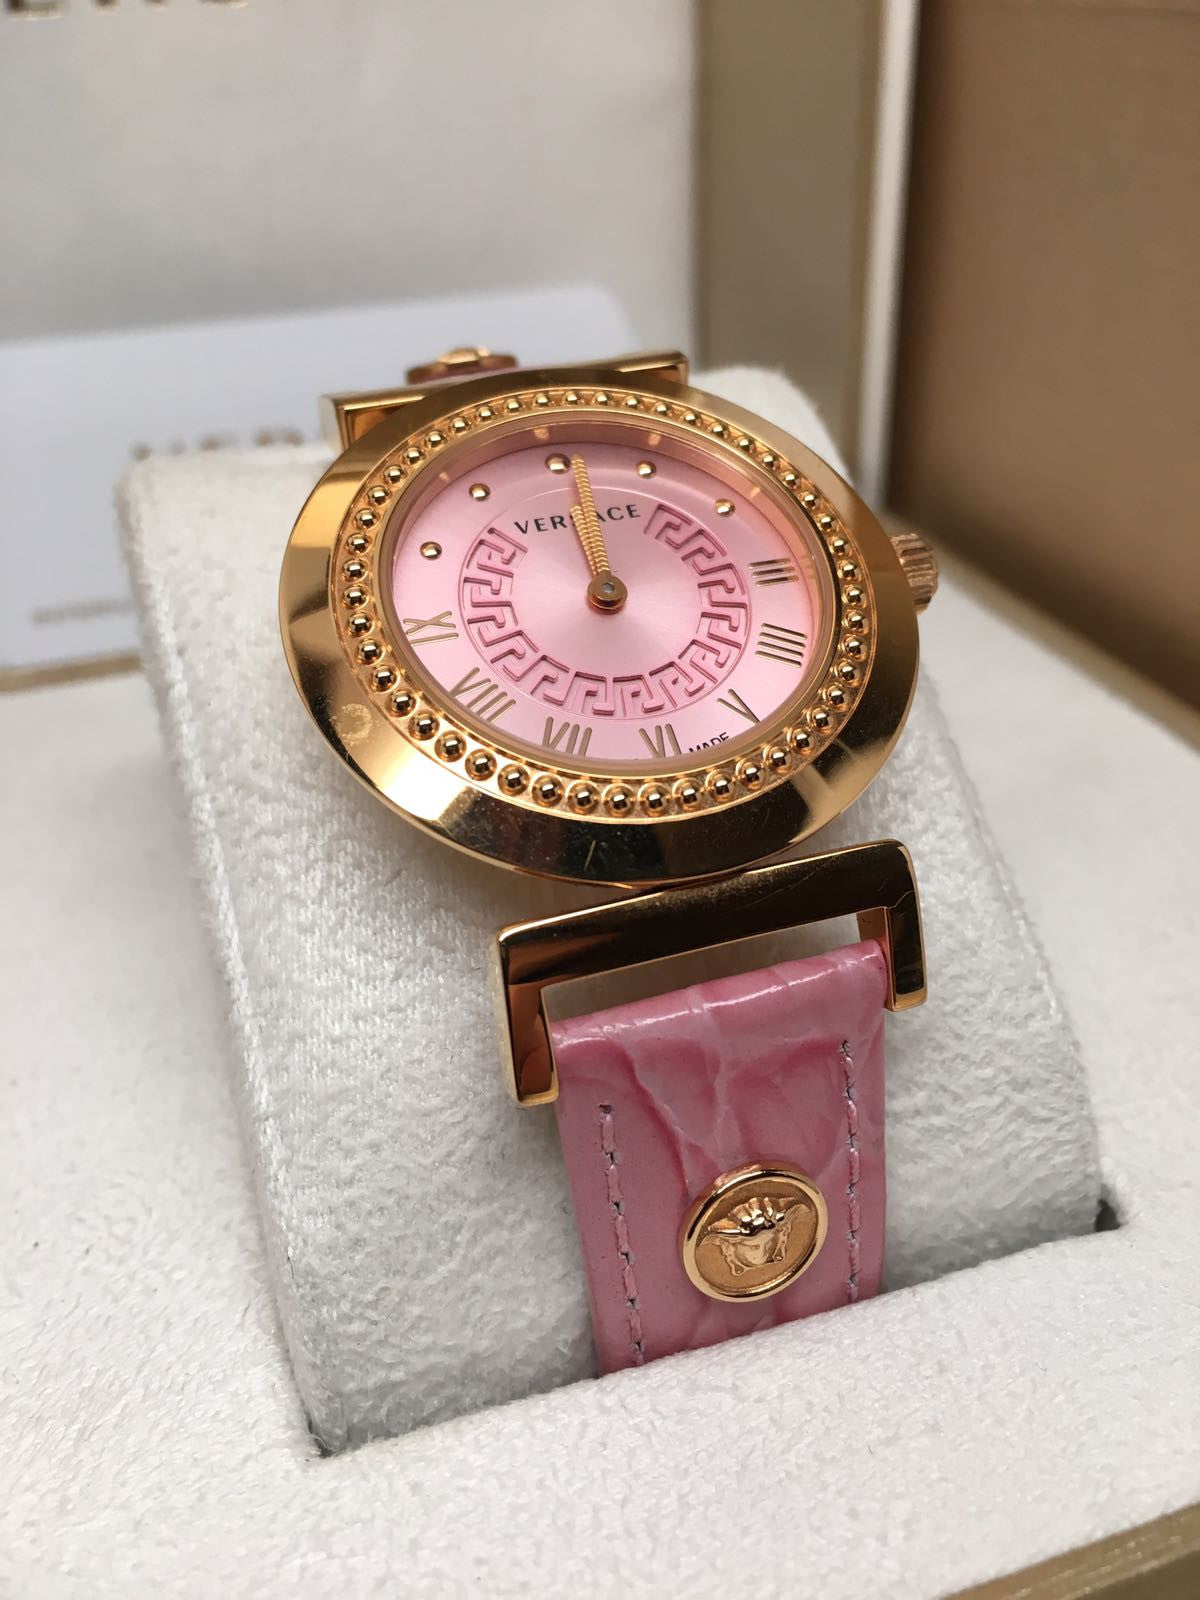 versace watch pink